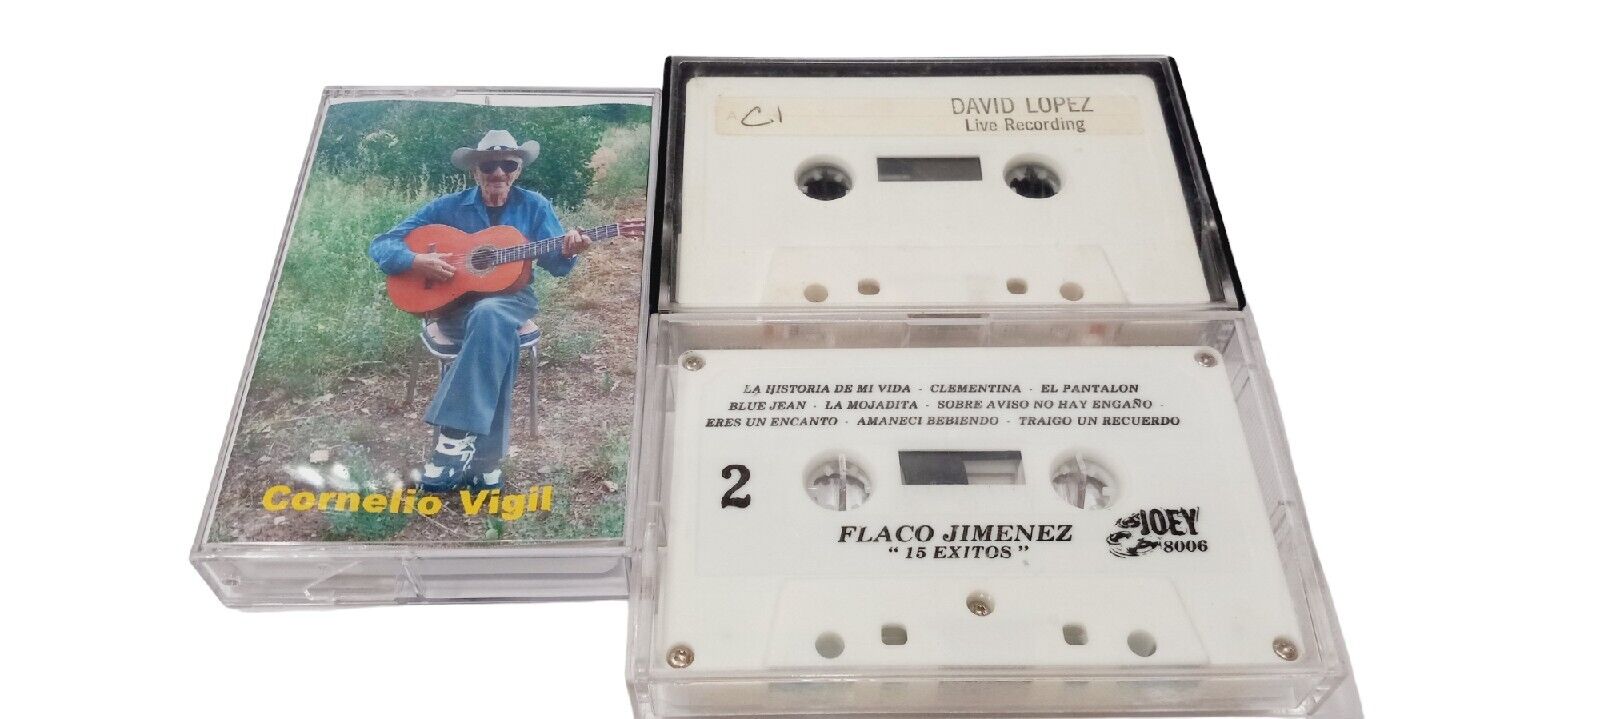 3 - Vintage Cassette Tapes Spanish Cornelio Vigil, Flaco Jimenez & David Lopez